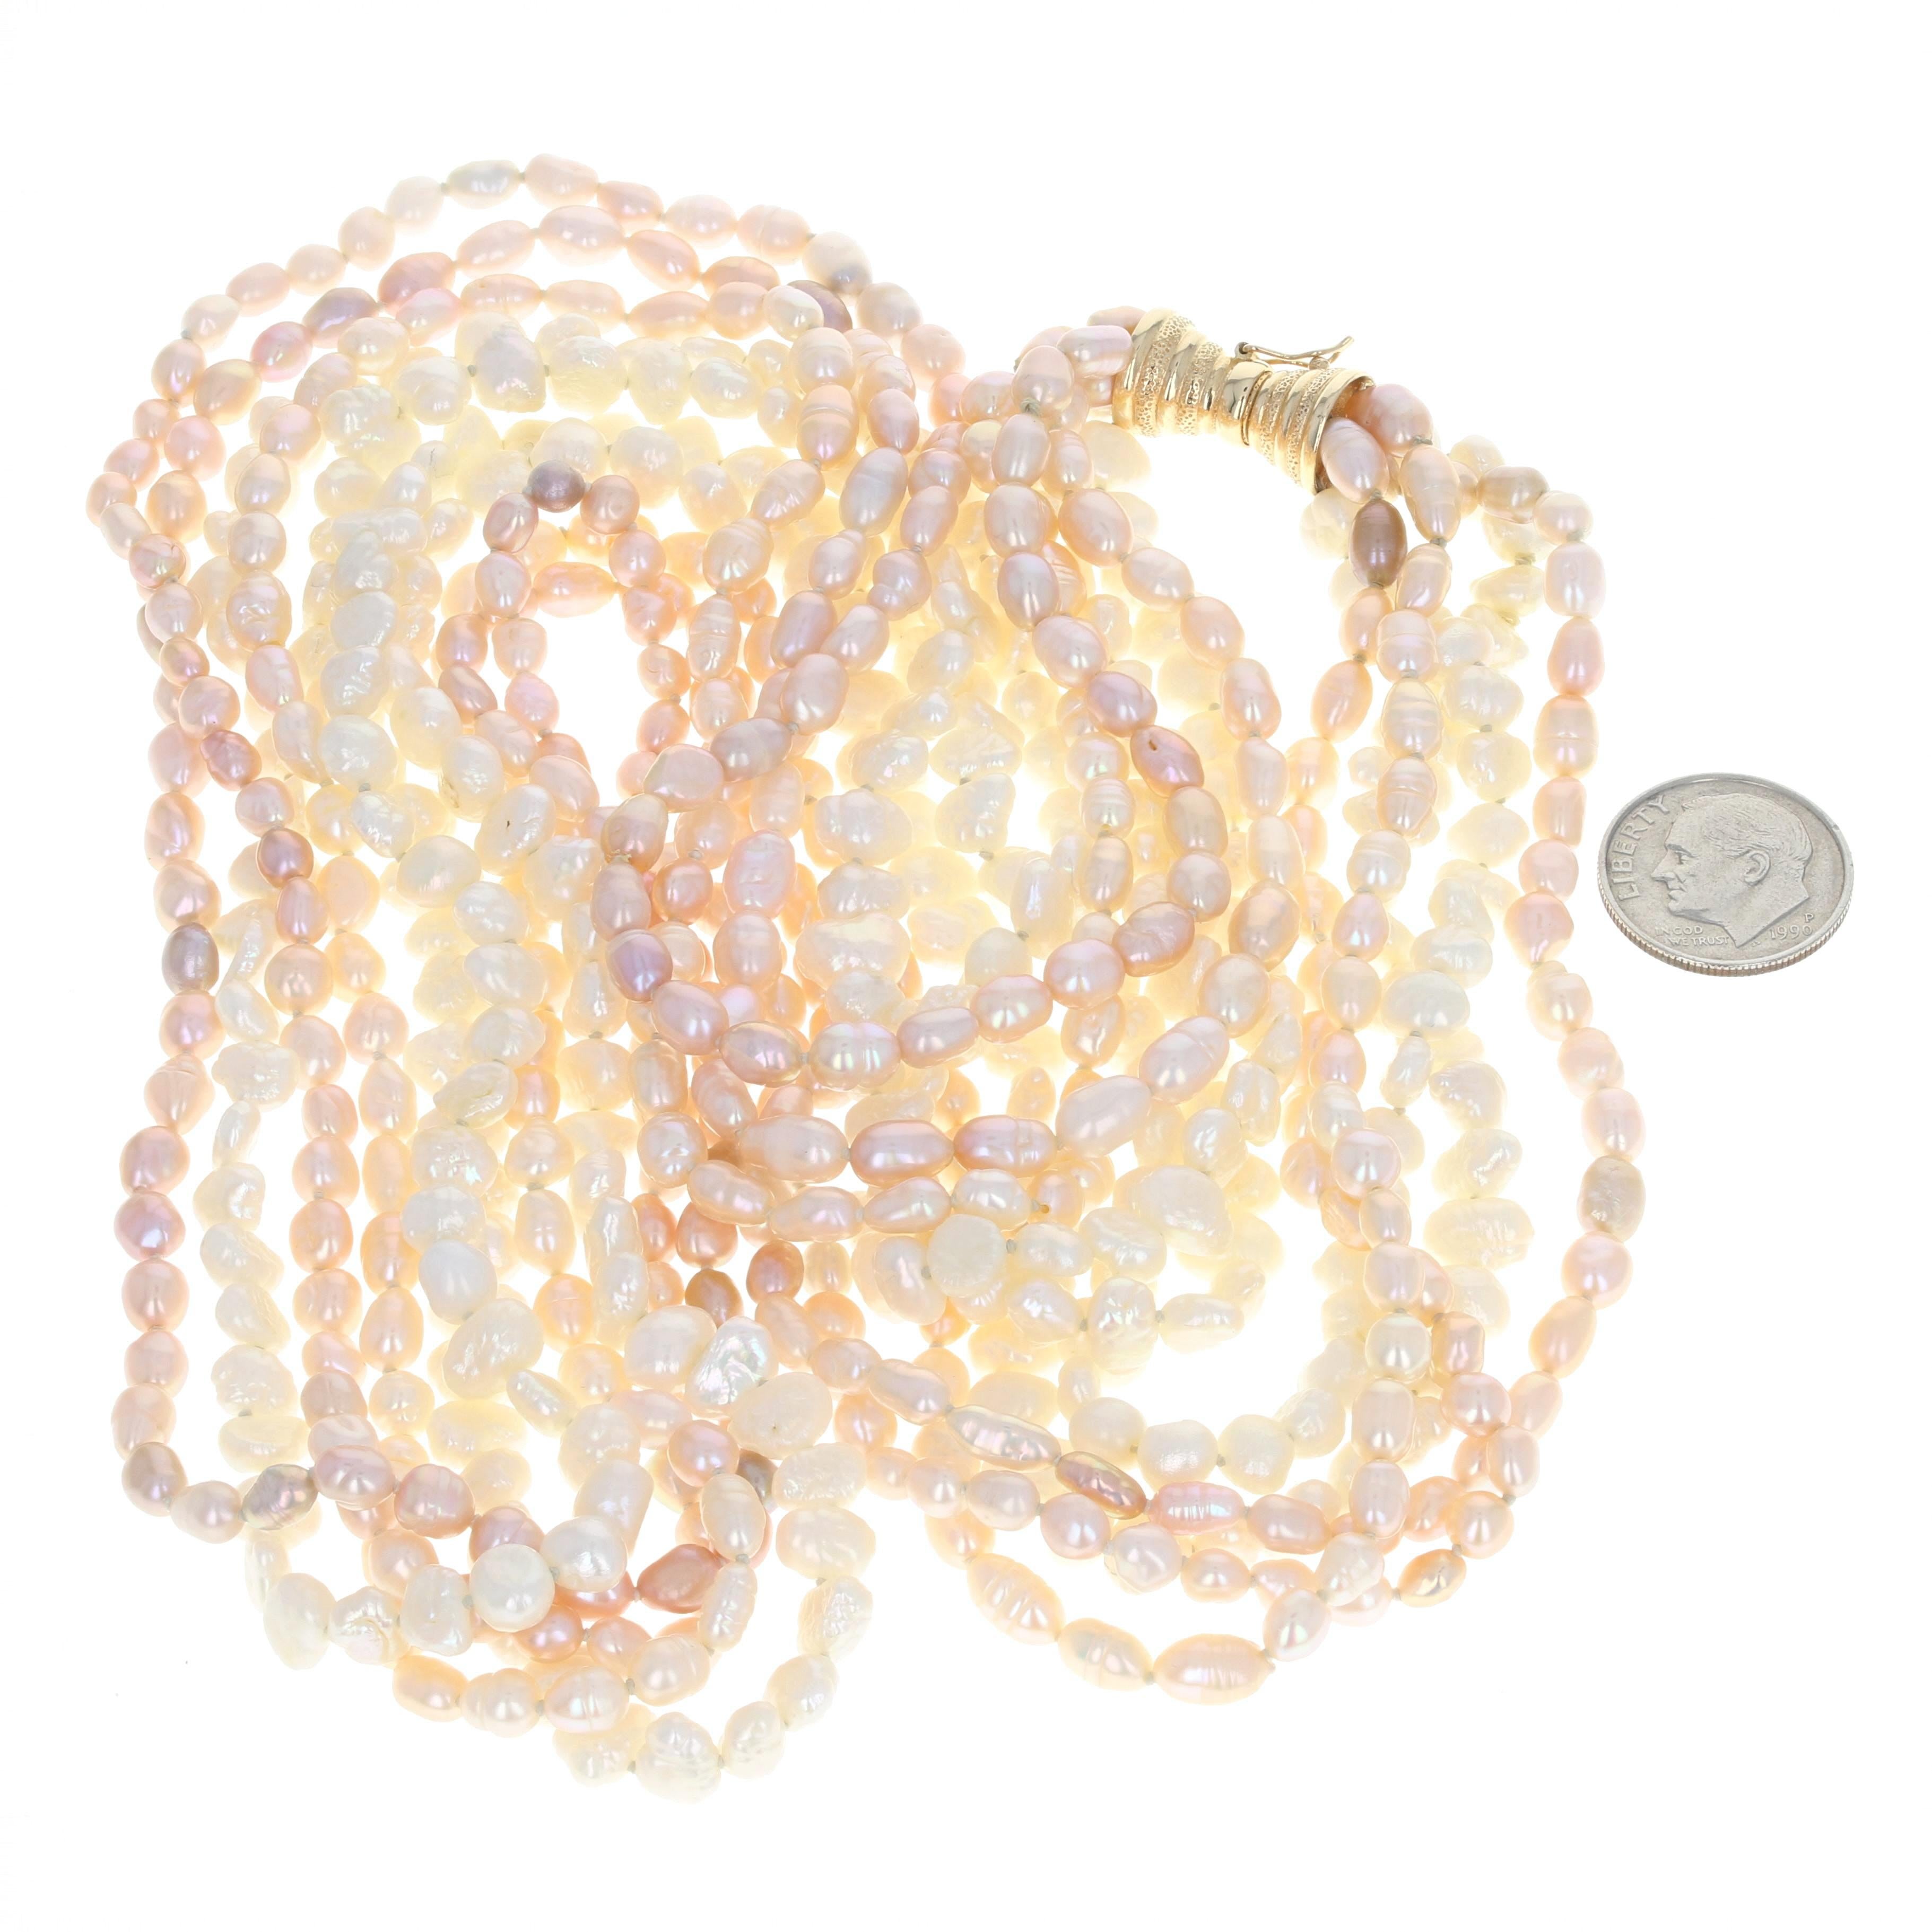 quality keshi pearls necklace -china -b2b -forum -blog -wikipedia -.cn -.gov -alibaba